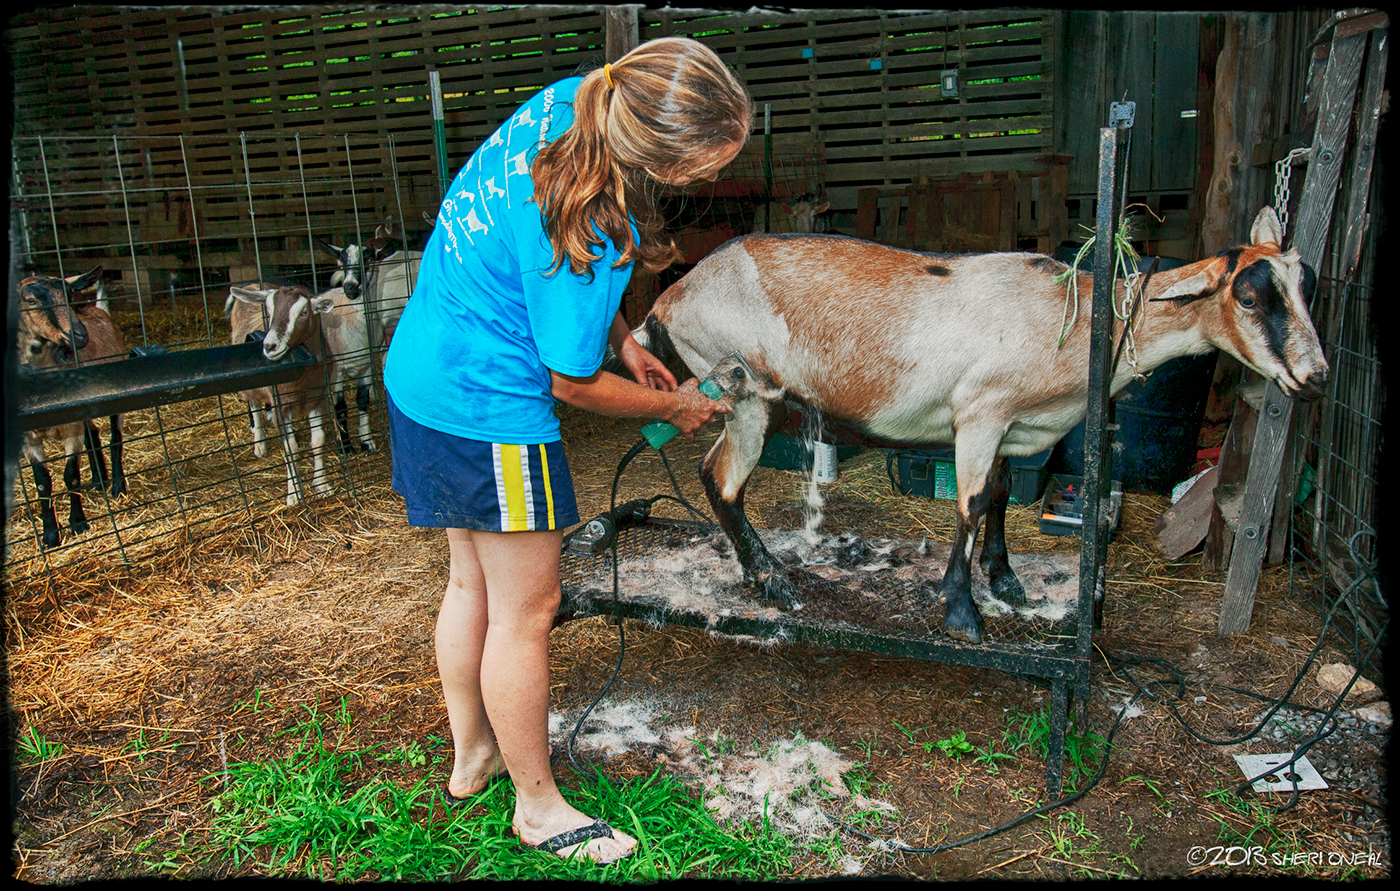 nashville commercial photographer Noble Springs Dairy dairy farm goats Photographer Sheri Oneal chickens Freerange goats milk Nashville Loves Food